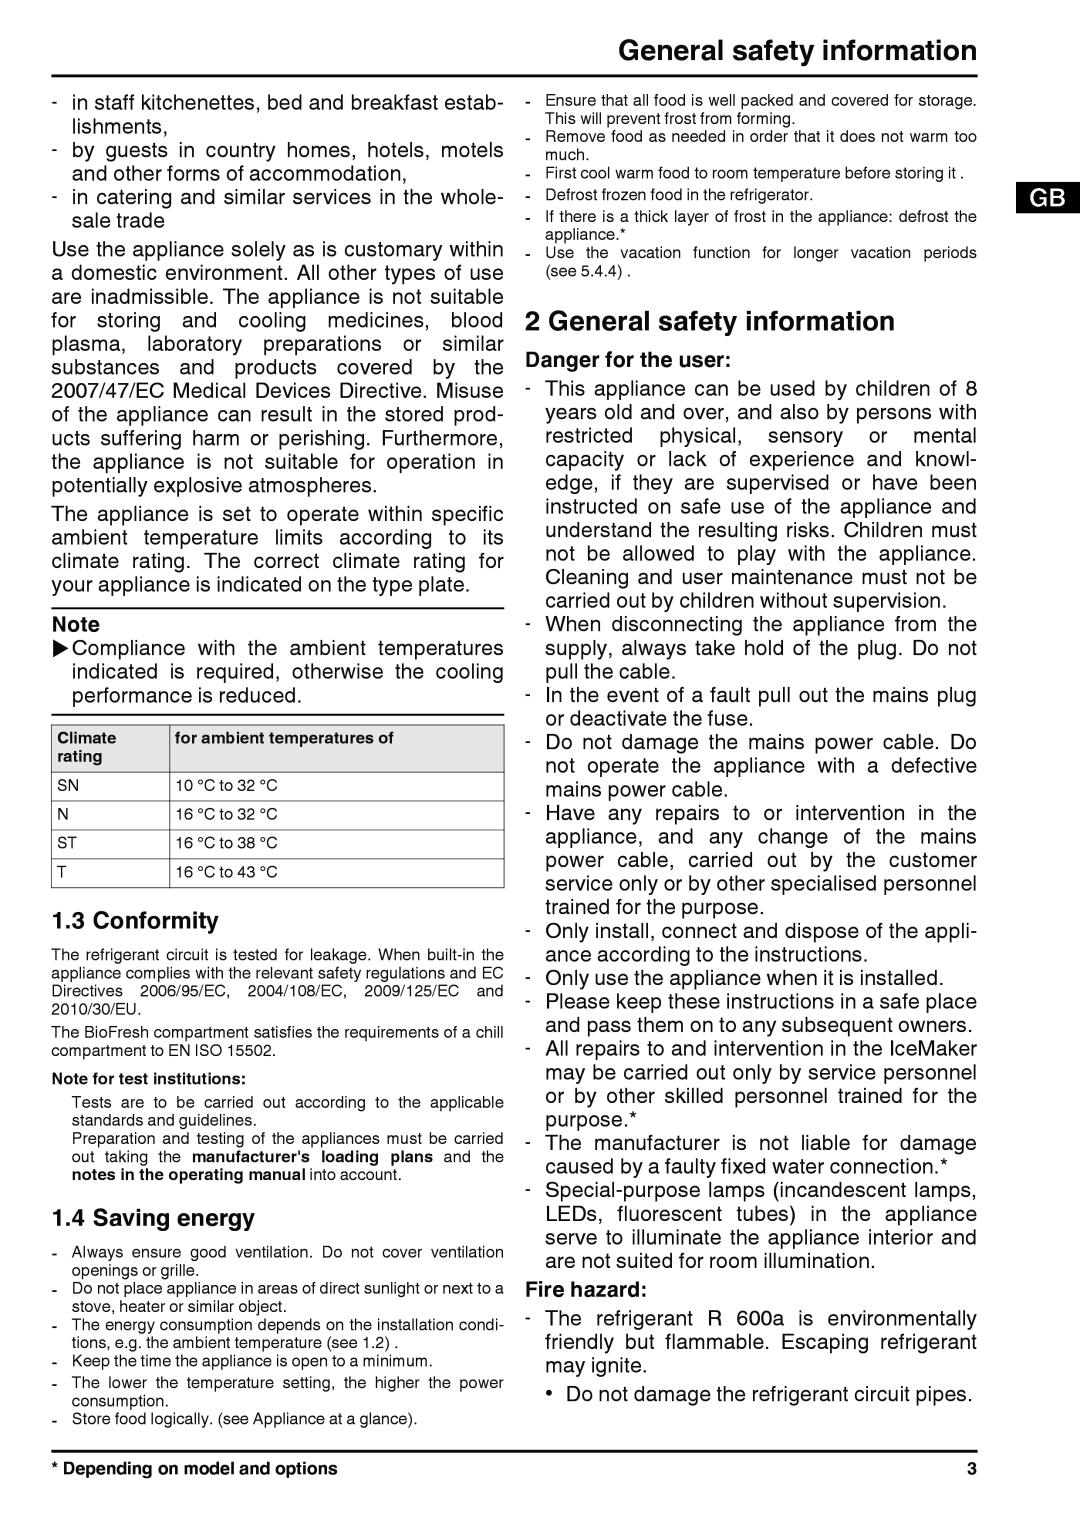 Liebherr 131113 7085462 - 01 General safety information, Conformity, Saving energy, Danger for the user, Fire hazard 